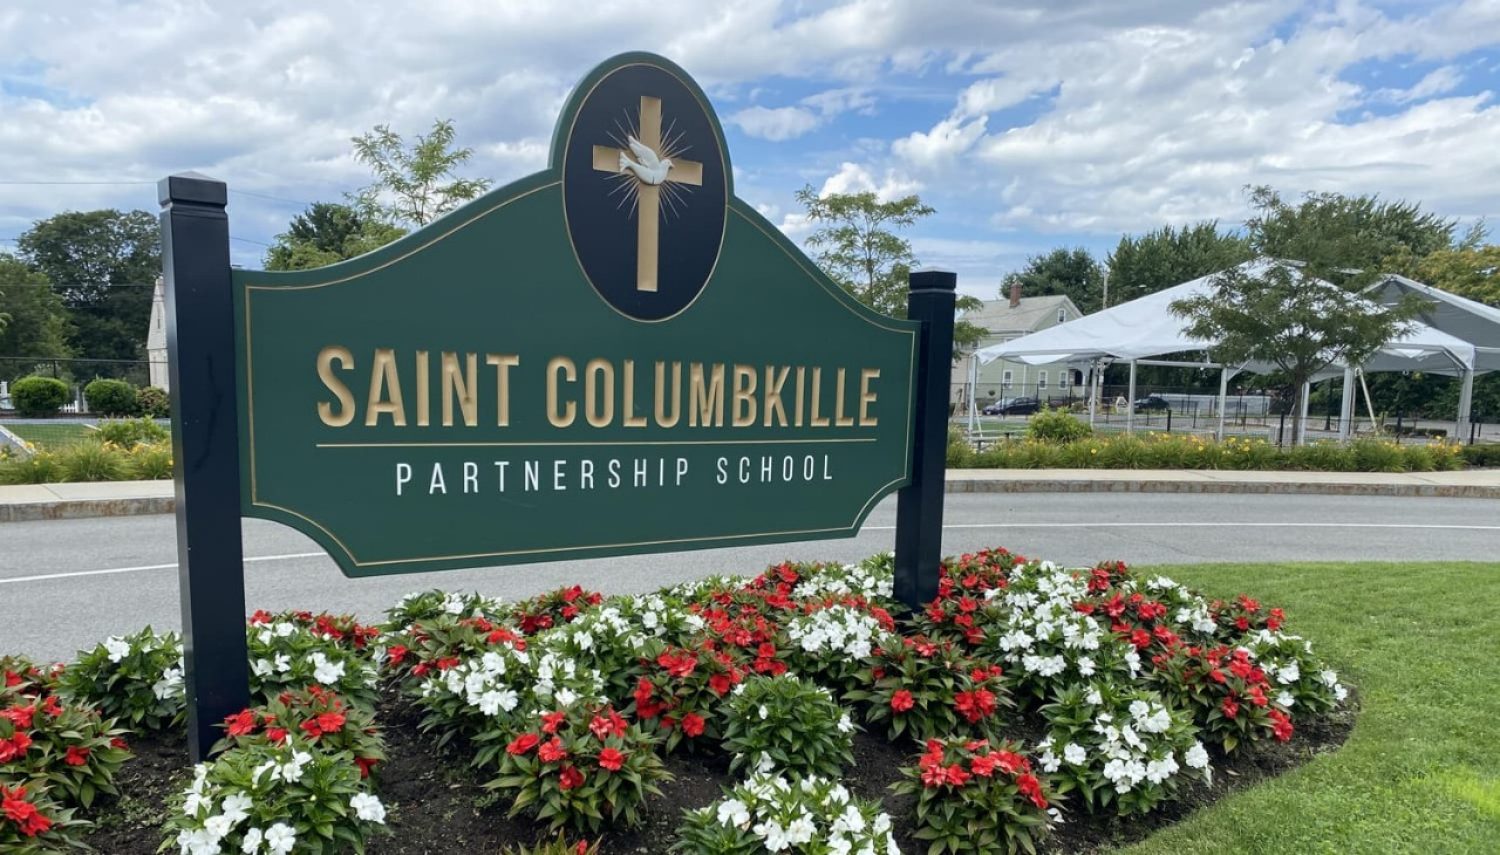 Saint Columbkille Partnership School sign